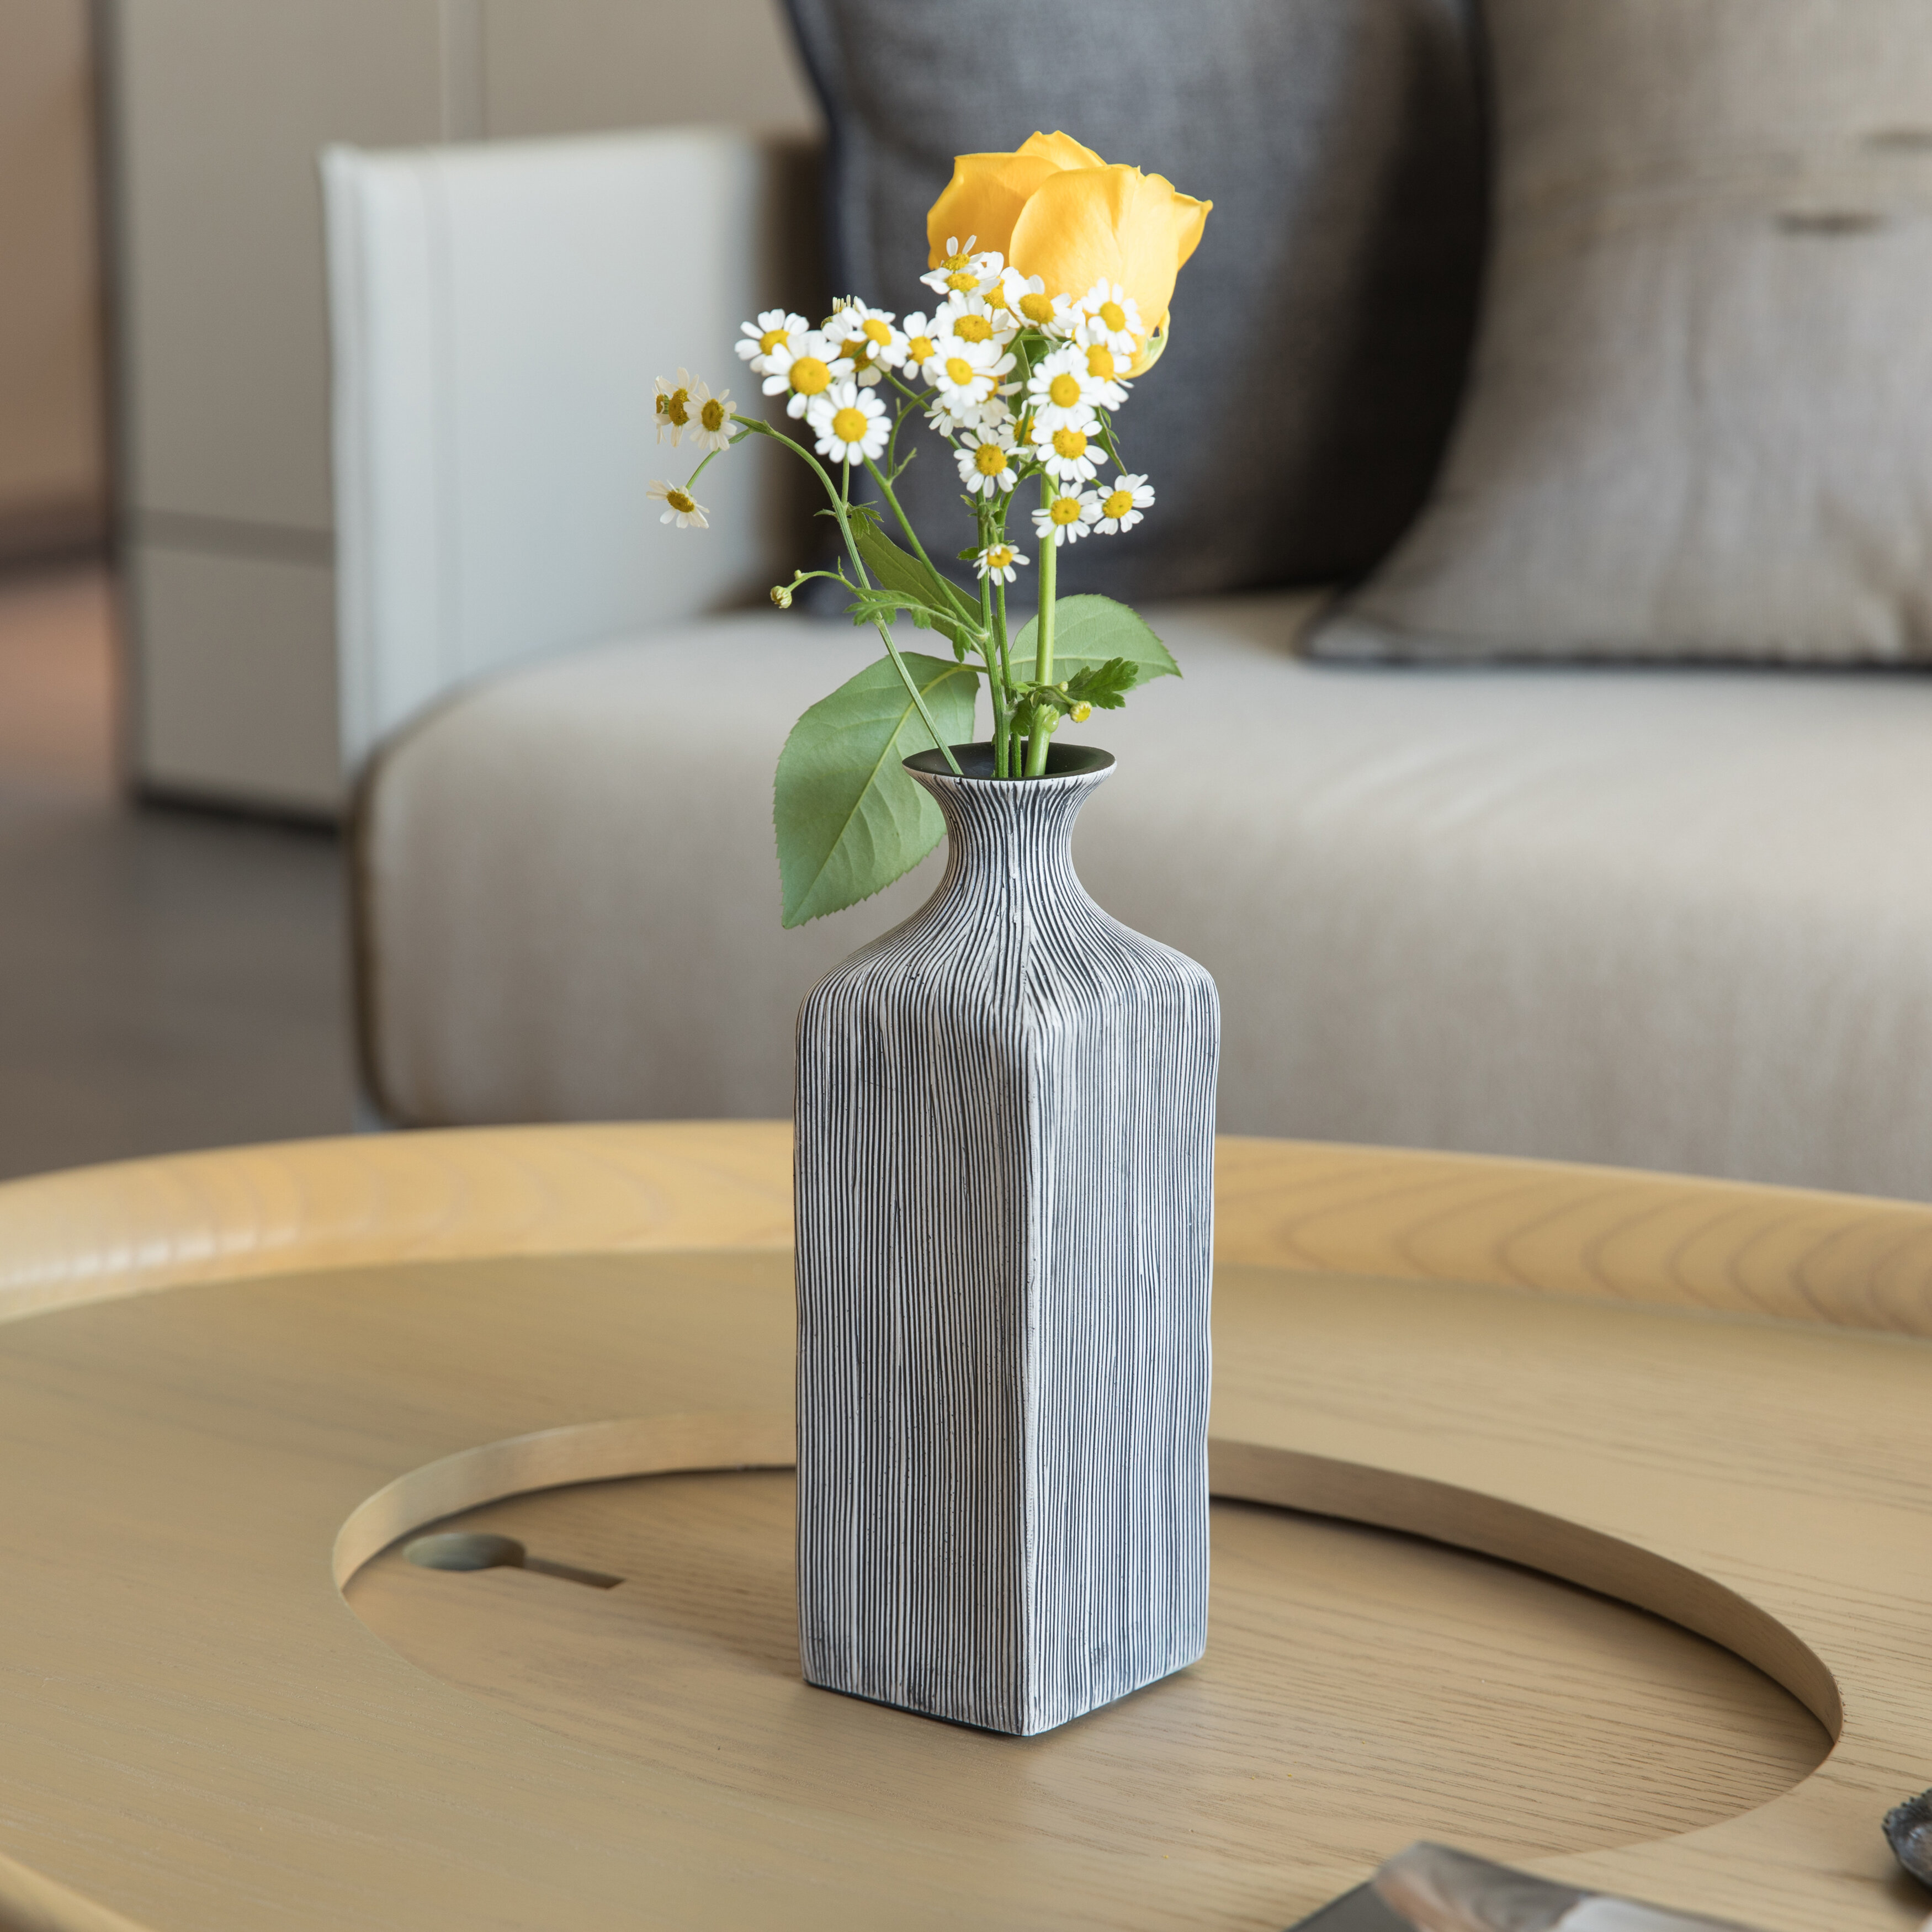 Details about   Nordic Style Ceramic Vase White Decorative Flower Vase Art Home Decor Gifts 